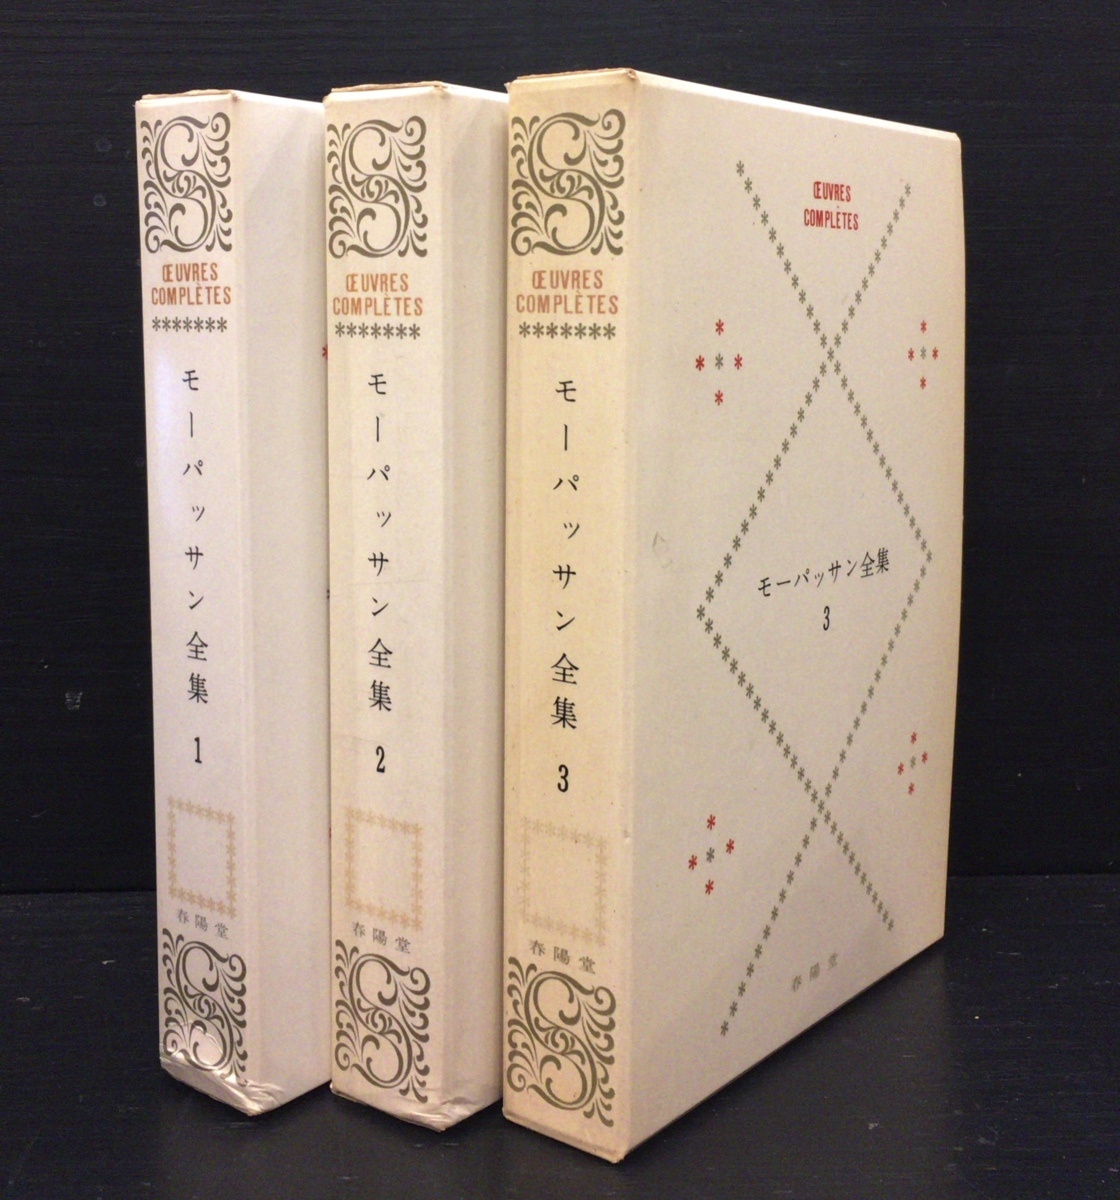 全3巻揃『モーパッサン全集』春陽堂 1965年 - 文学、小説